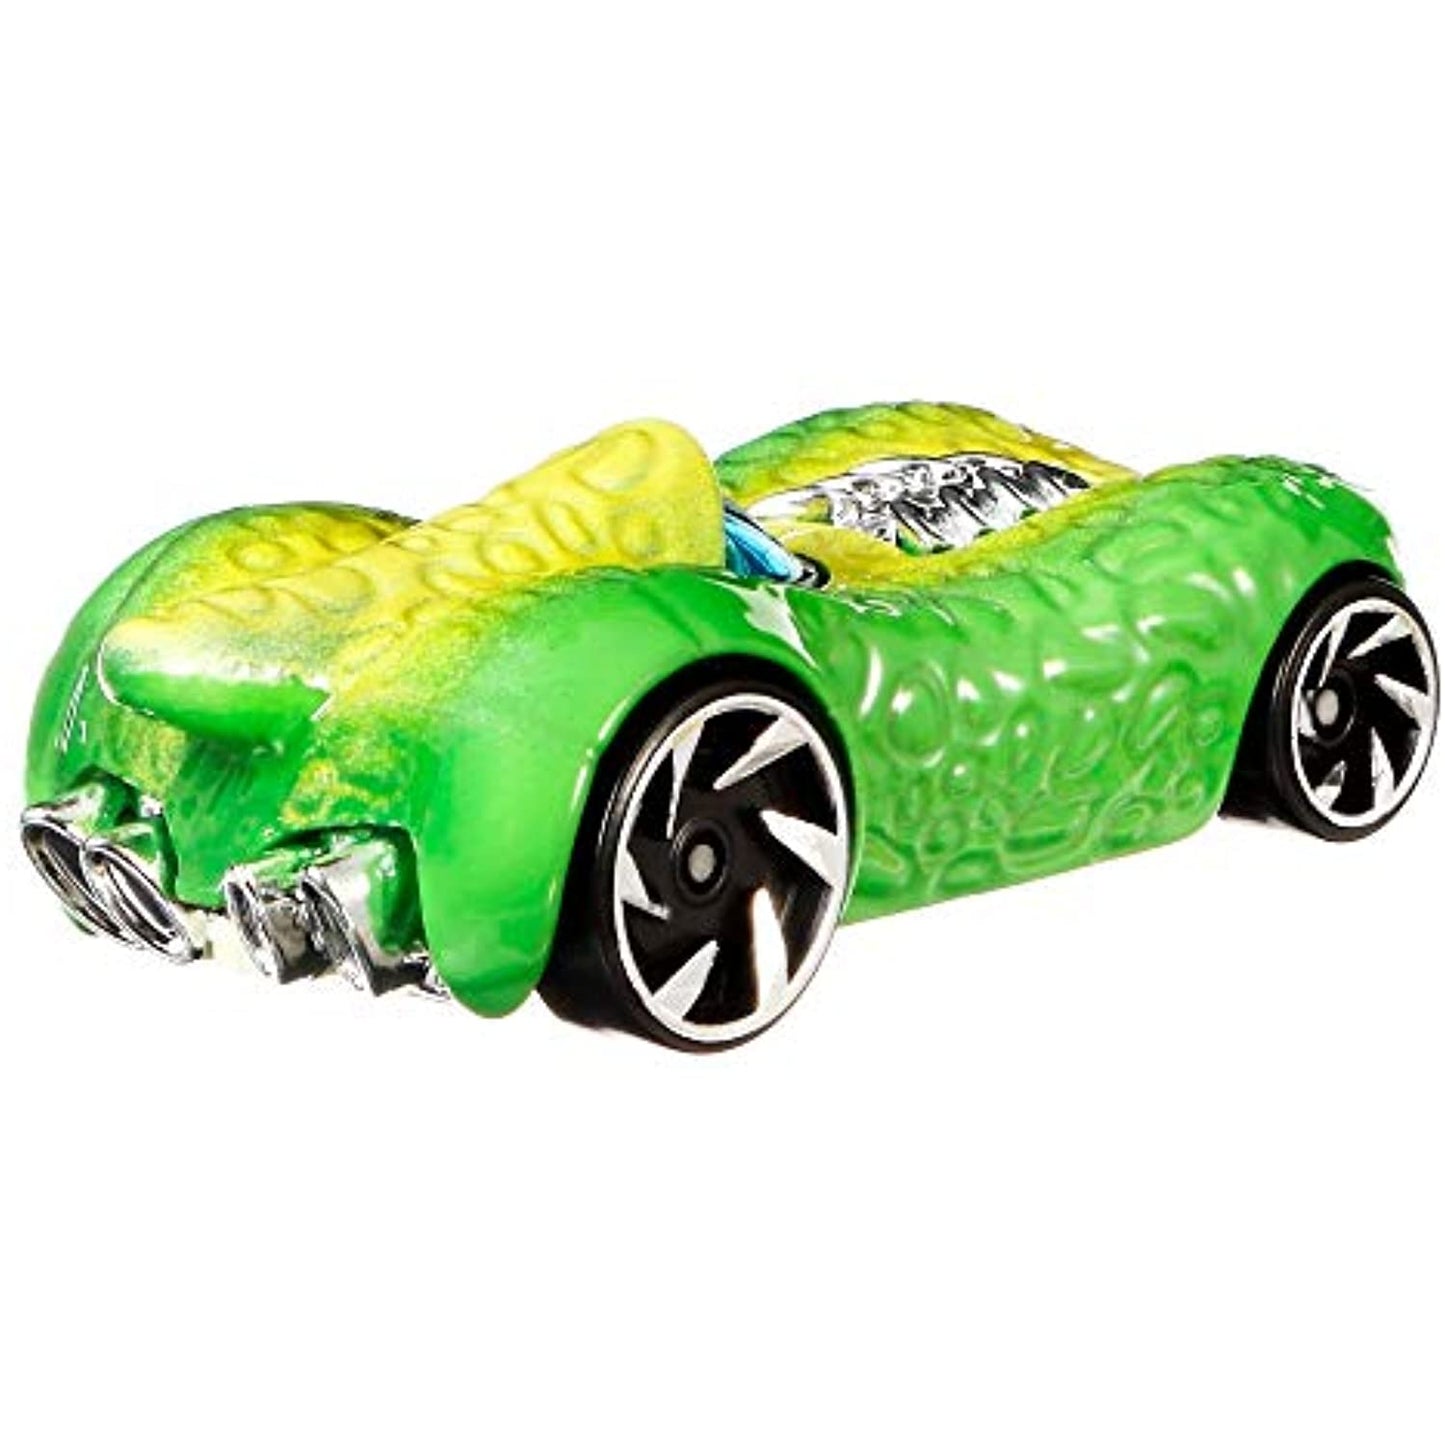 Hot Wheels Toy Story Rex the Dinosaur 1:64 Diecast Car